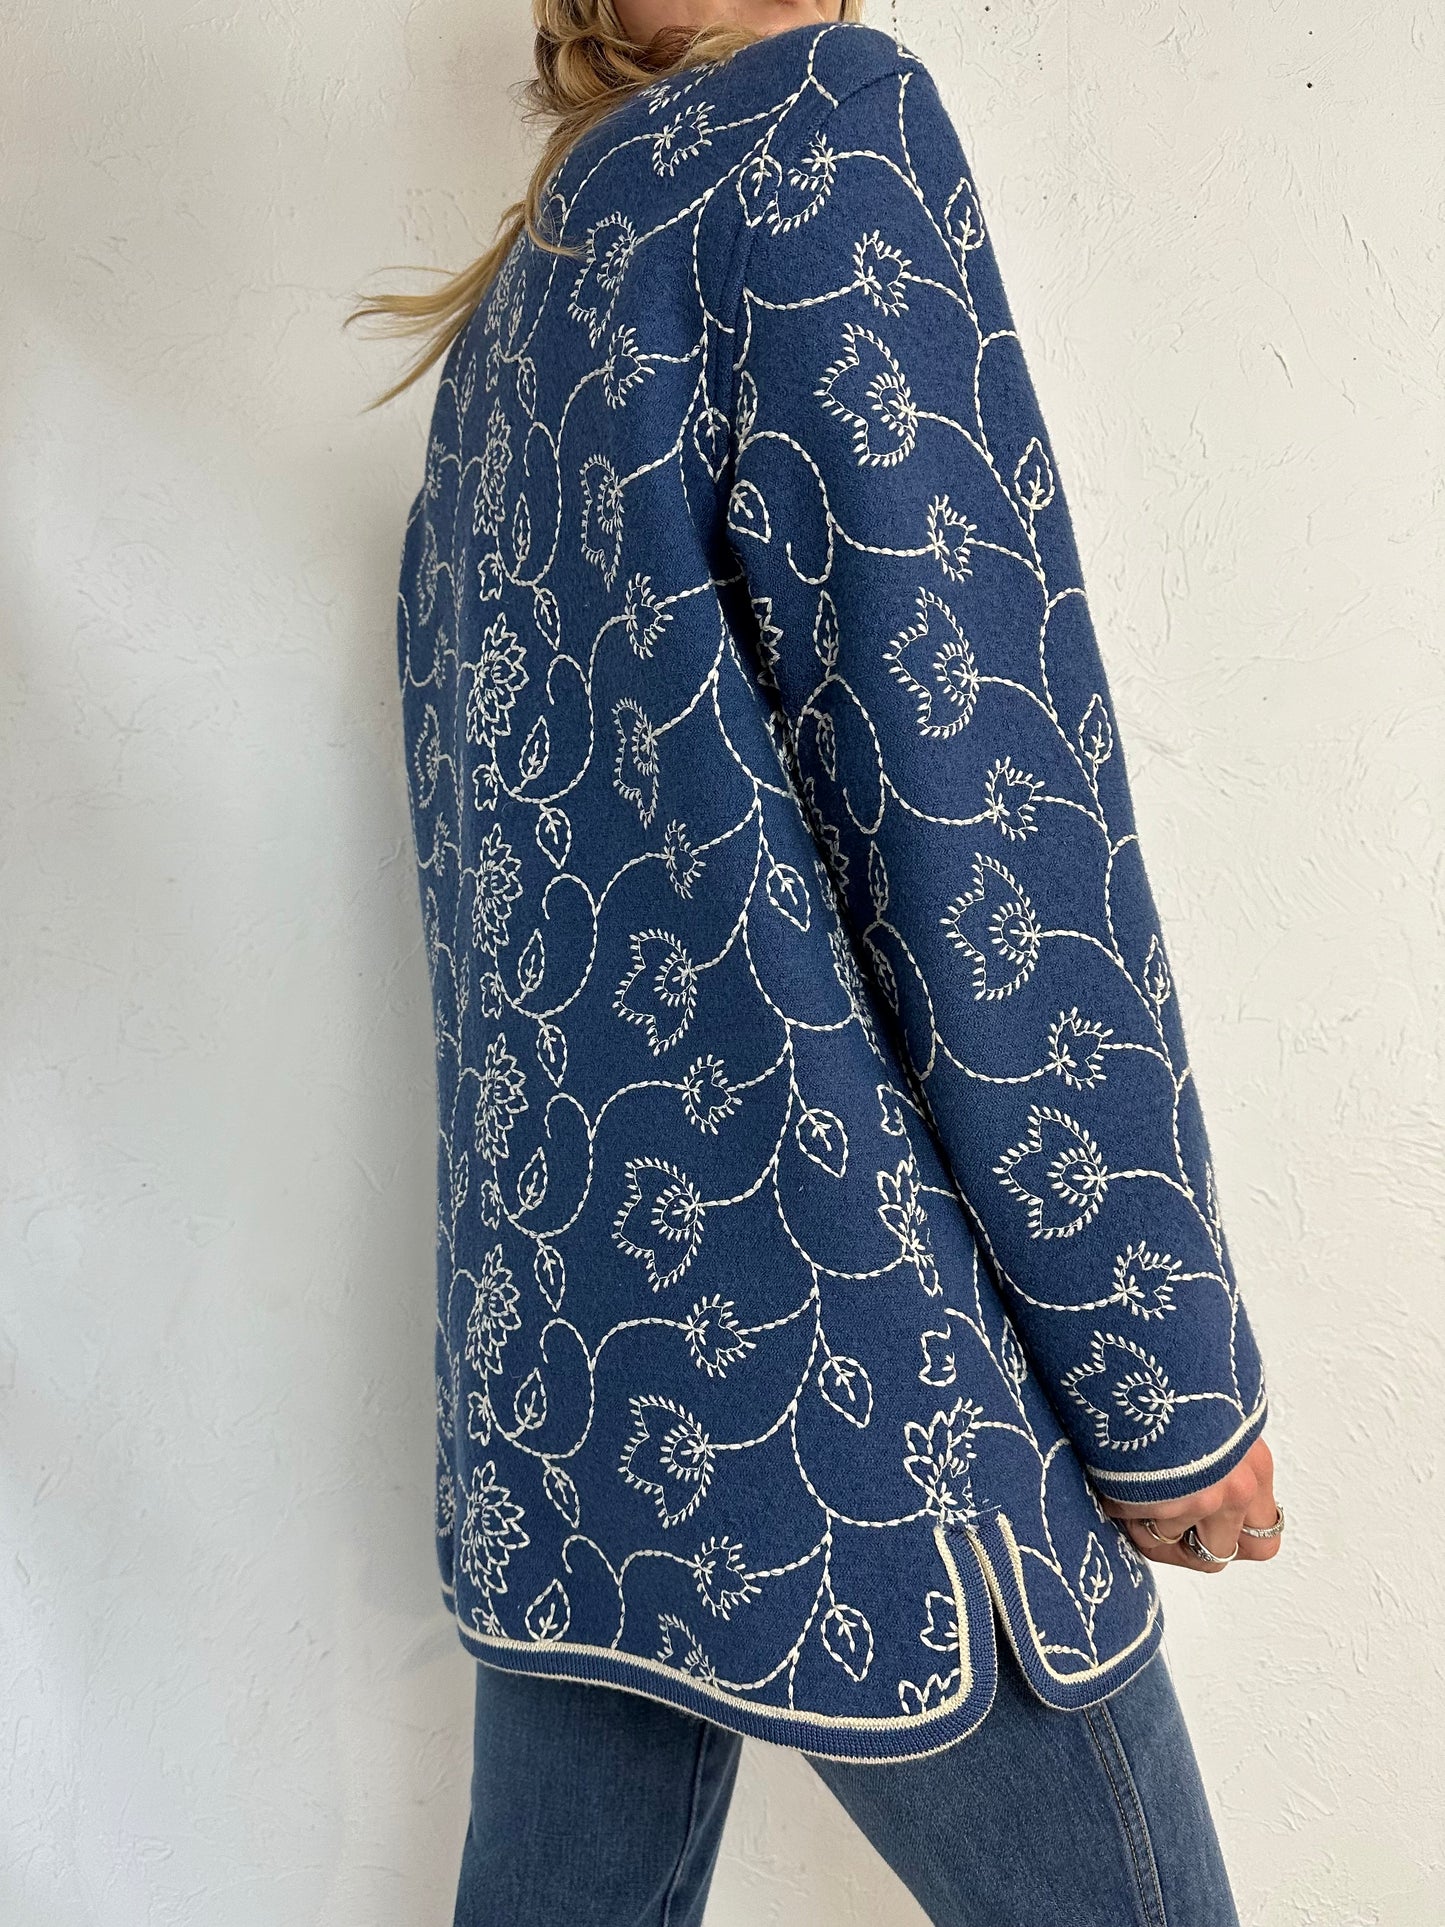 90s 'Geiger' Blue Wool Embroidered Jacket / Medium